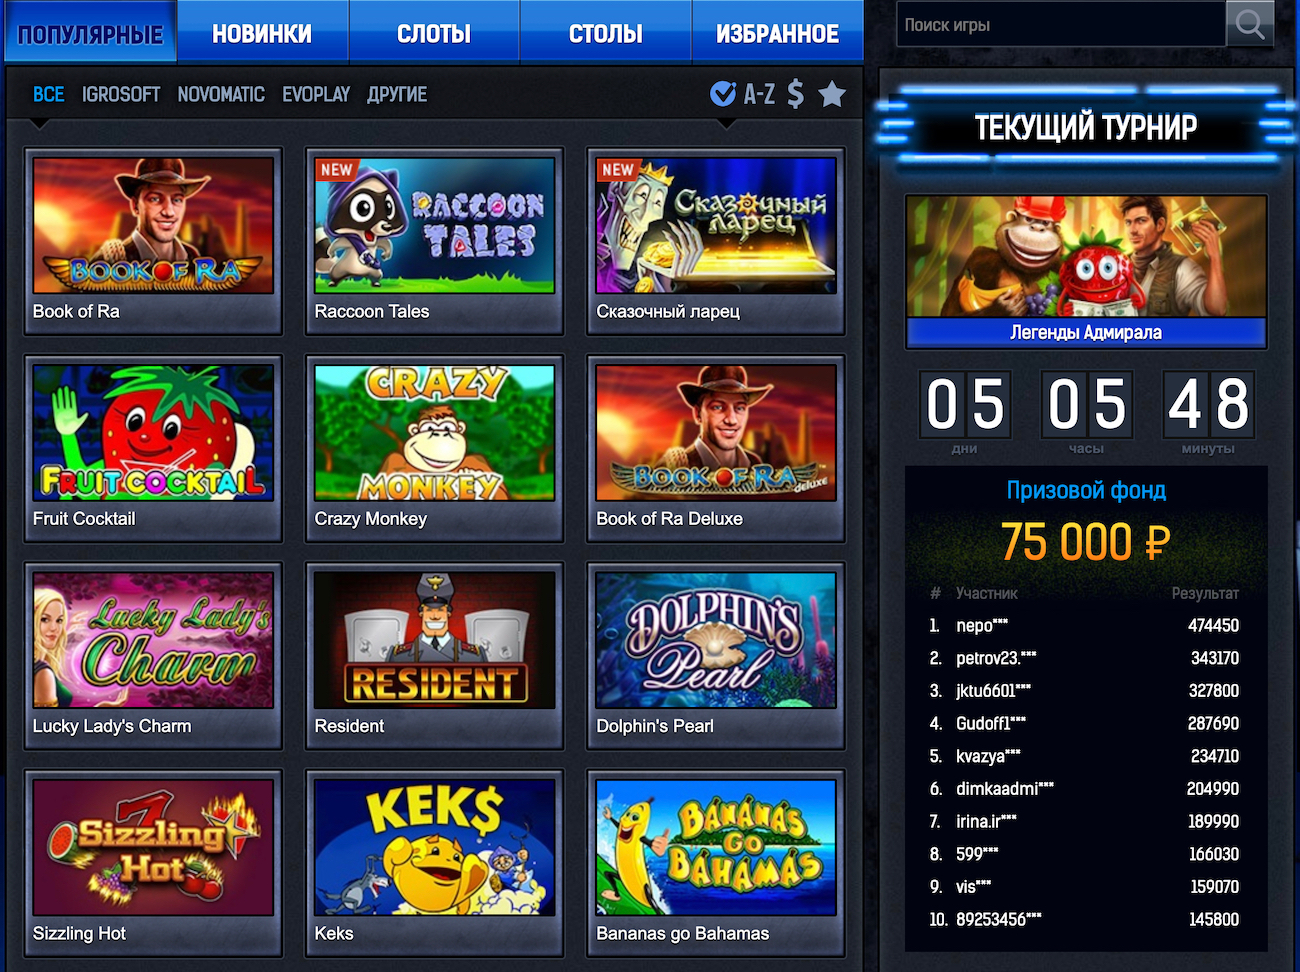 Absolutely Mammoth Power Play Jackpot slot online cassino gratis